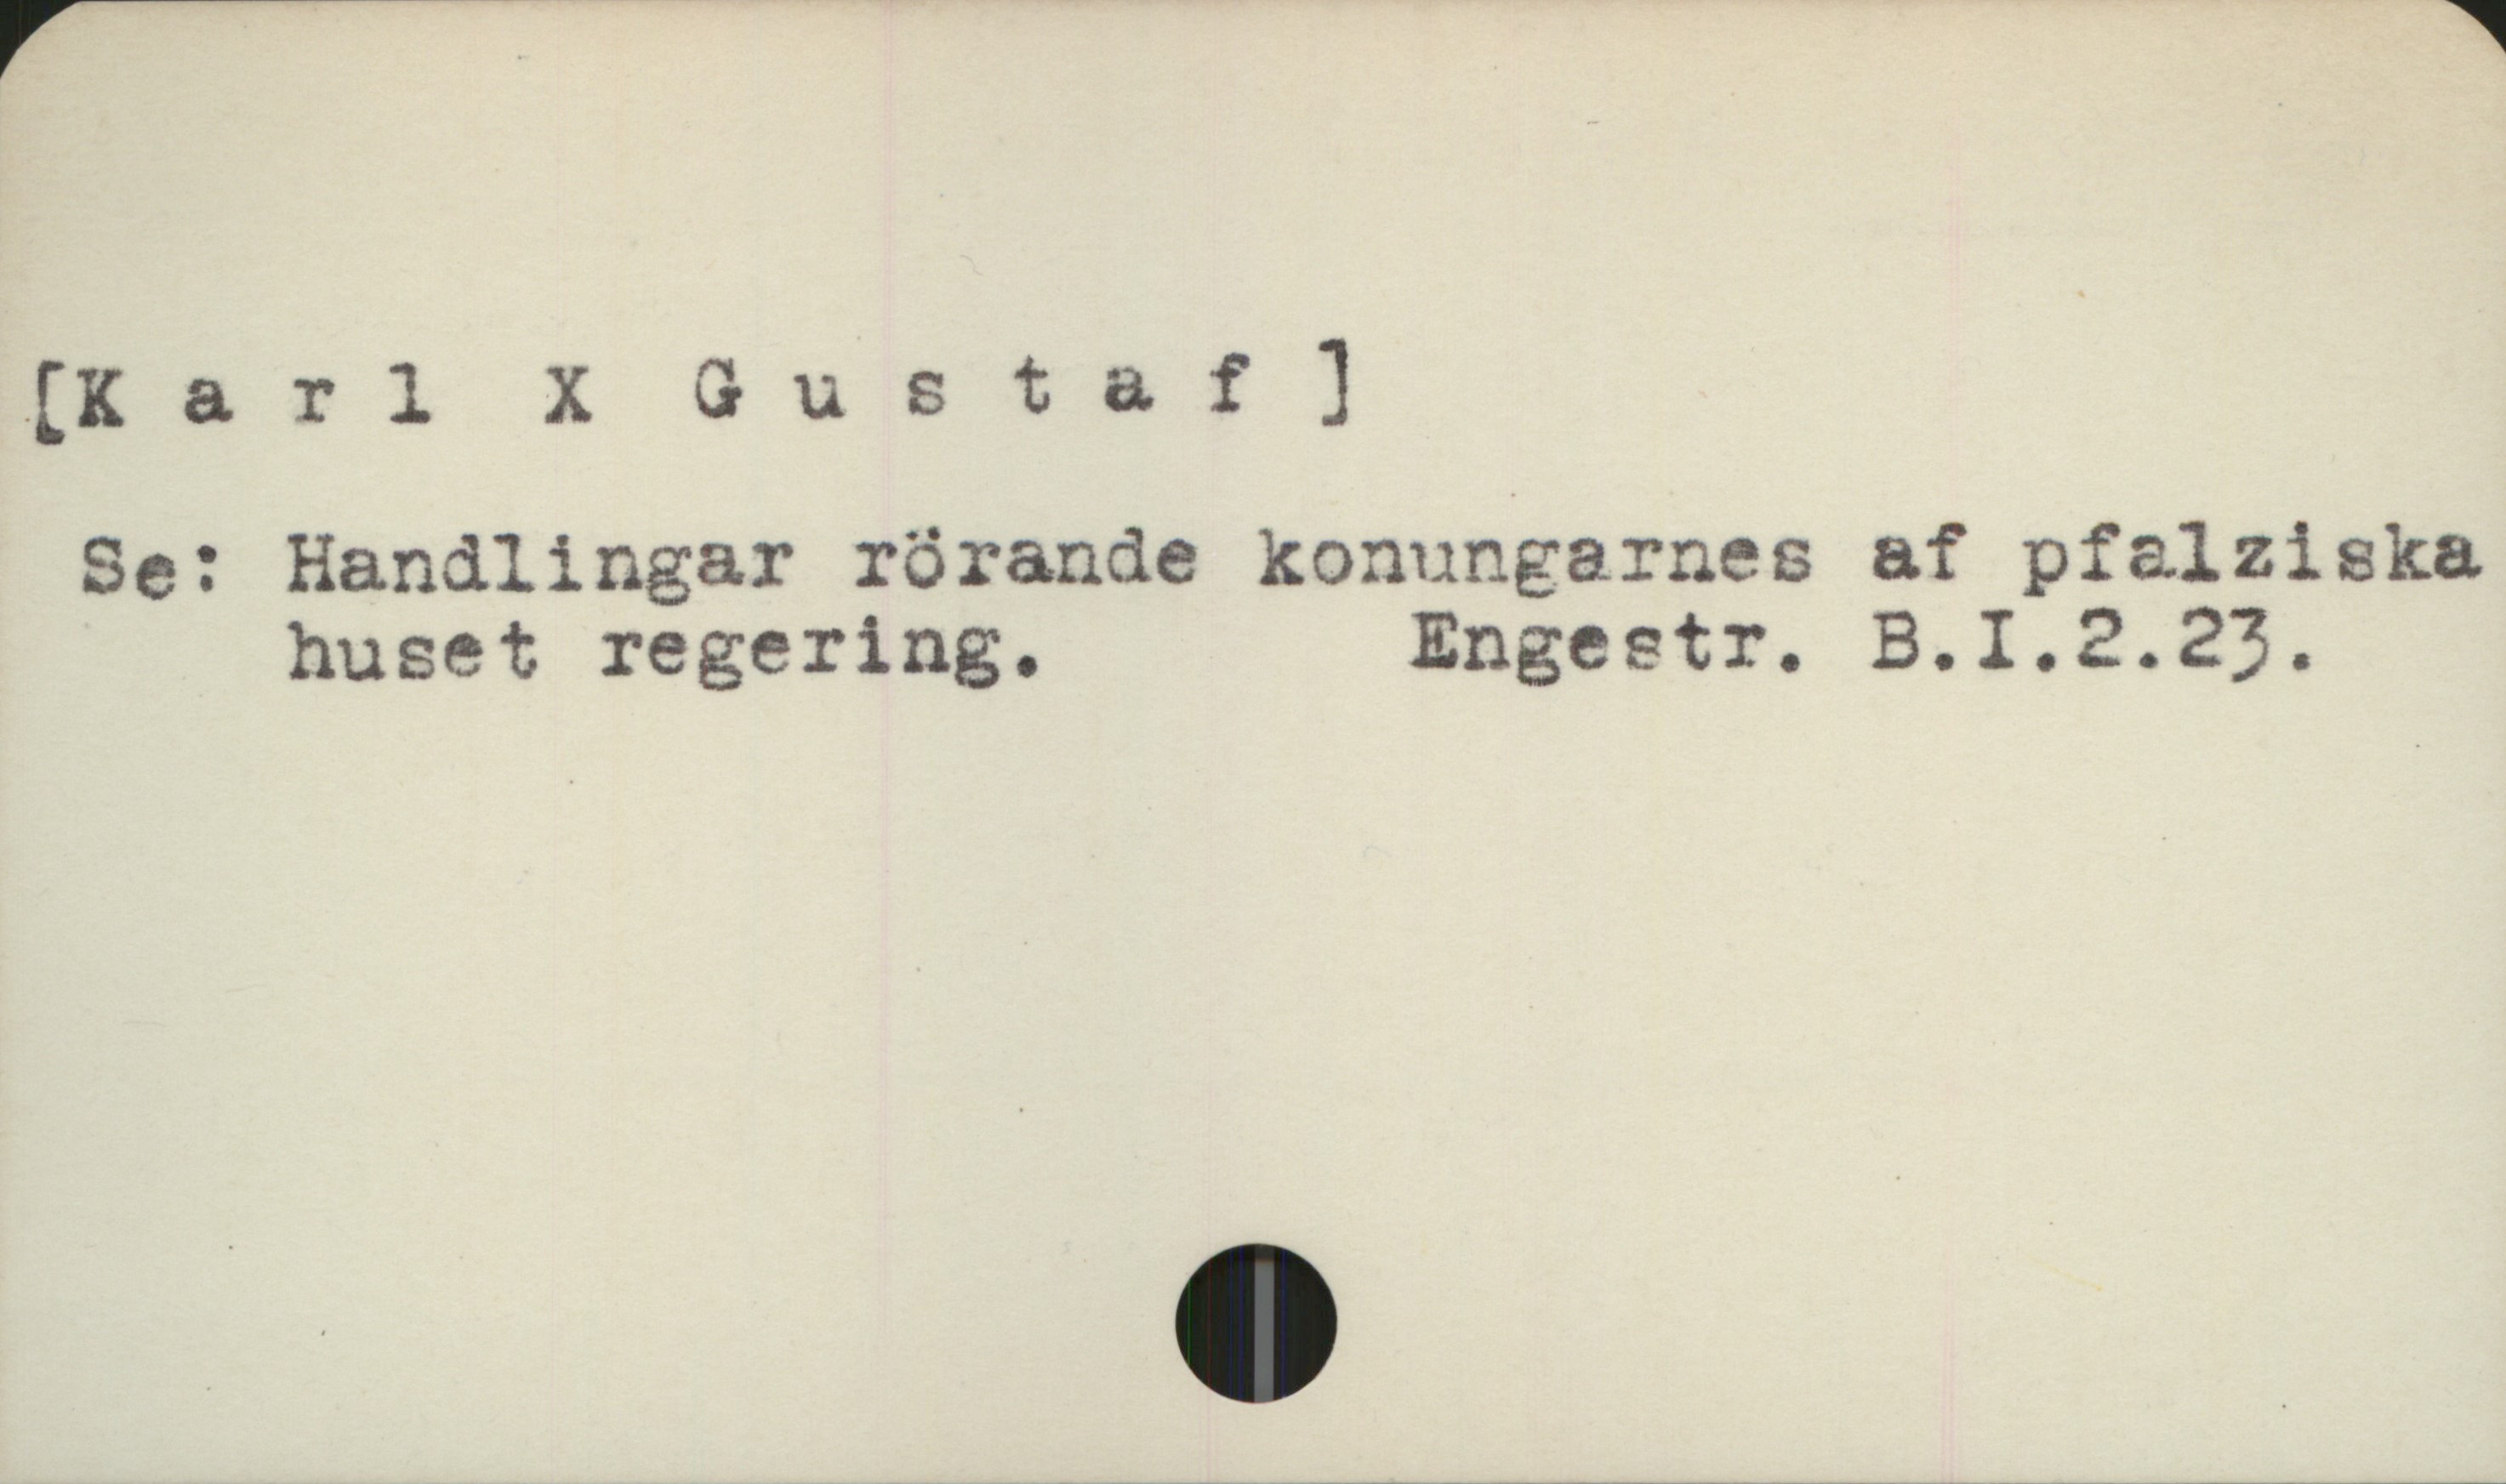  (Karl X Gustaf ]
Se: Handlingar rörande konungarnes af pfalziska
huset regering. Engestr. B.I.2.22.

